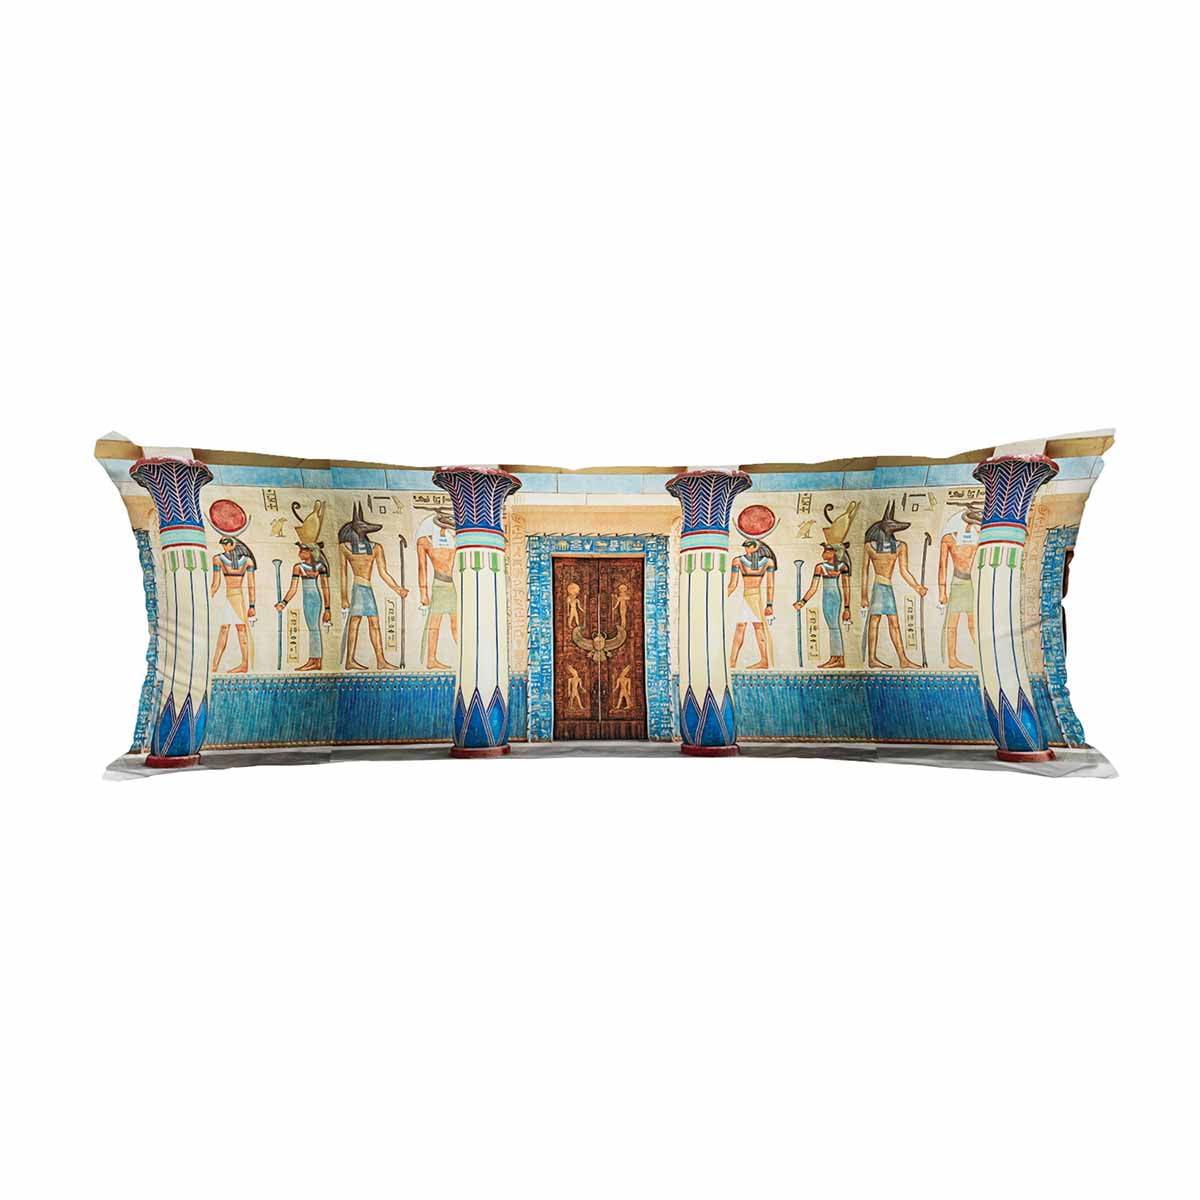 Antvinoler Ancient Egyptian Hieroglyphs Mythology Egypt Pharaoh Throw Pillow Covers Decorative 18x18 Inch Pillowcase Square Cushion Cases for Home Sofa Bedroom Livingroom Car